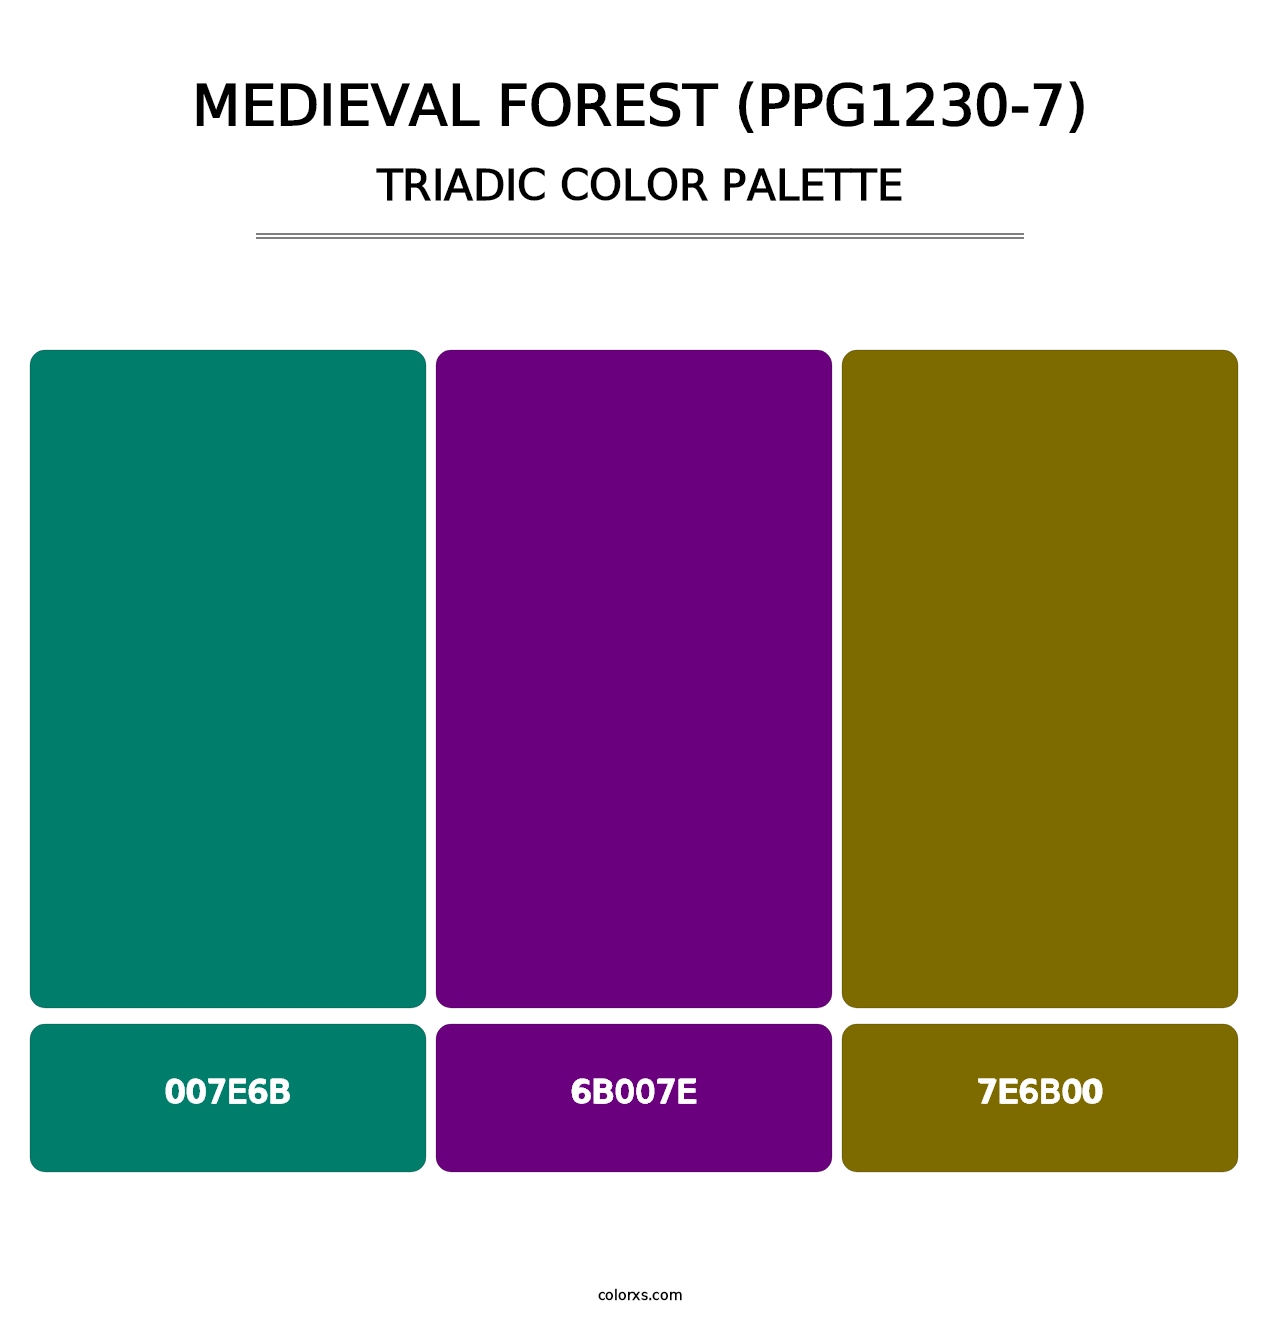 Medieval Forest (PPG1230-7) - Triadic Color Palette